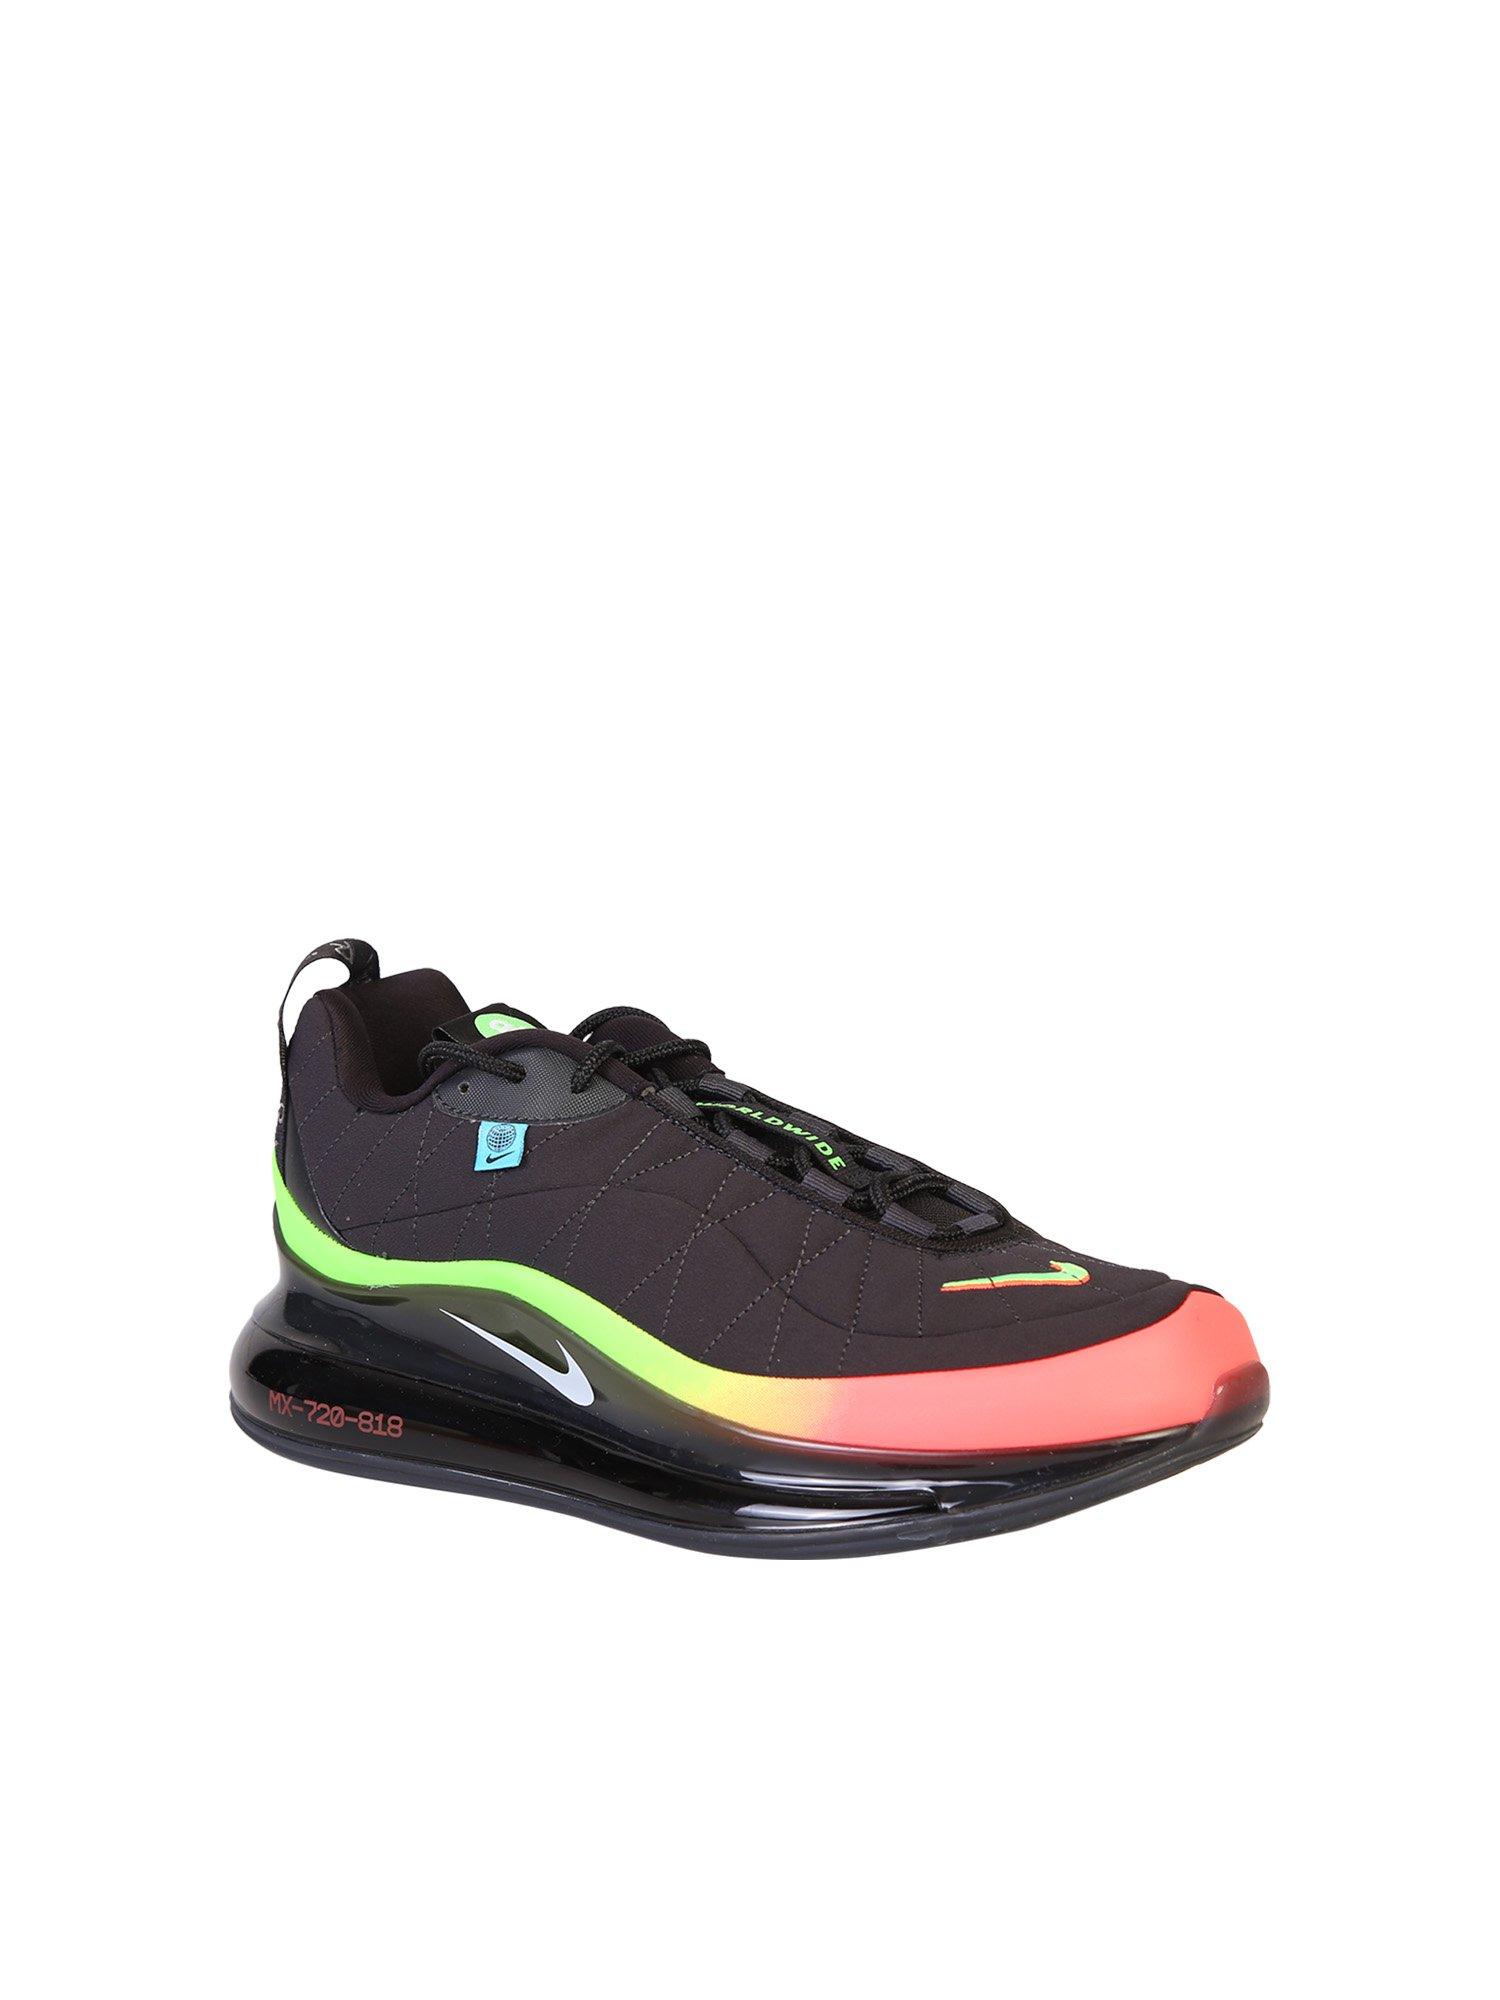 Nike Mx-720-818 Sneakers in Black for Men | Lyst